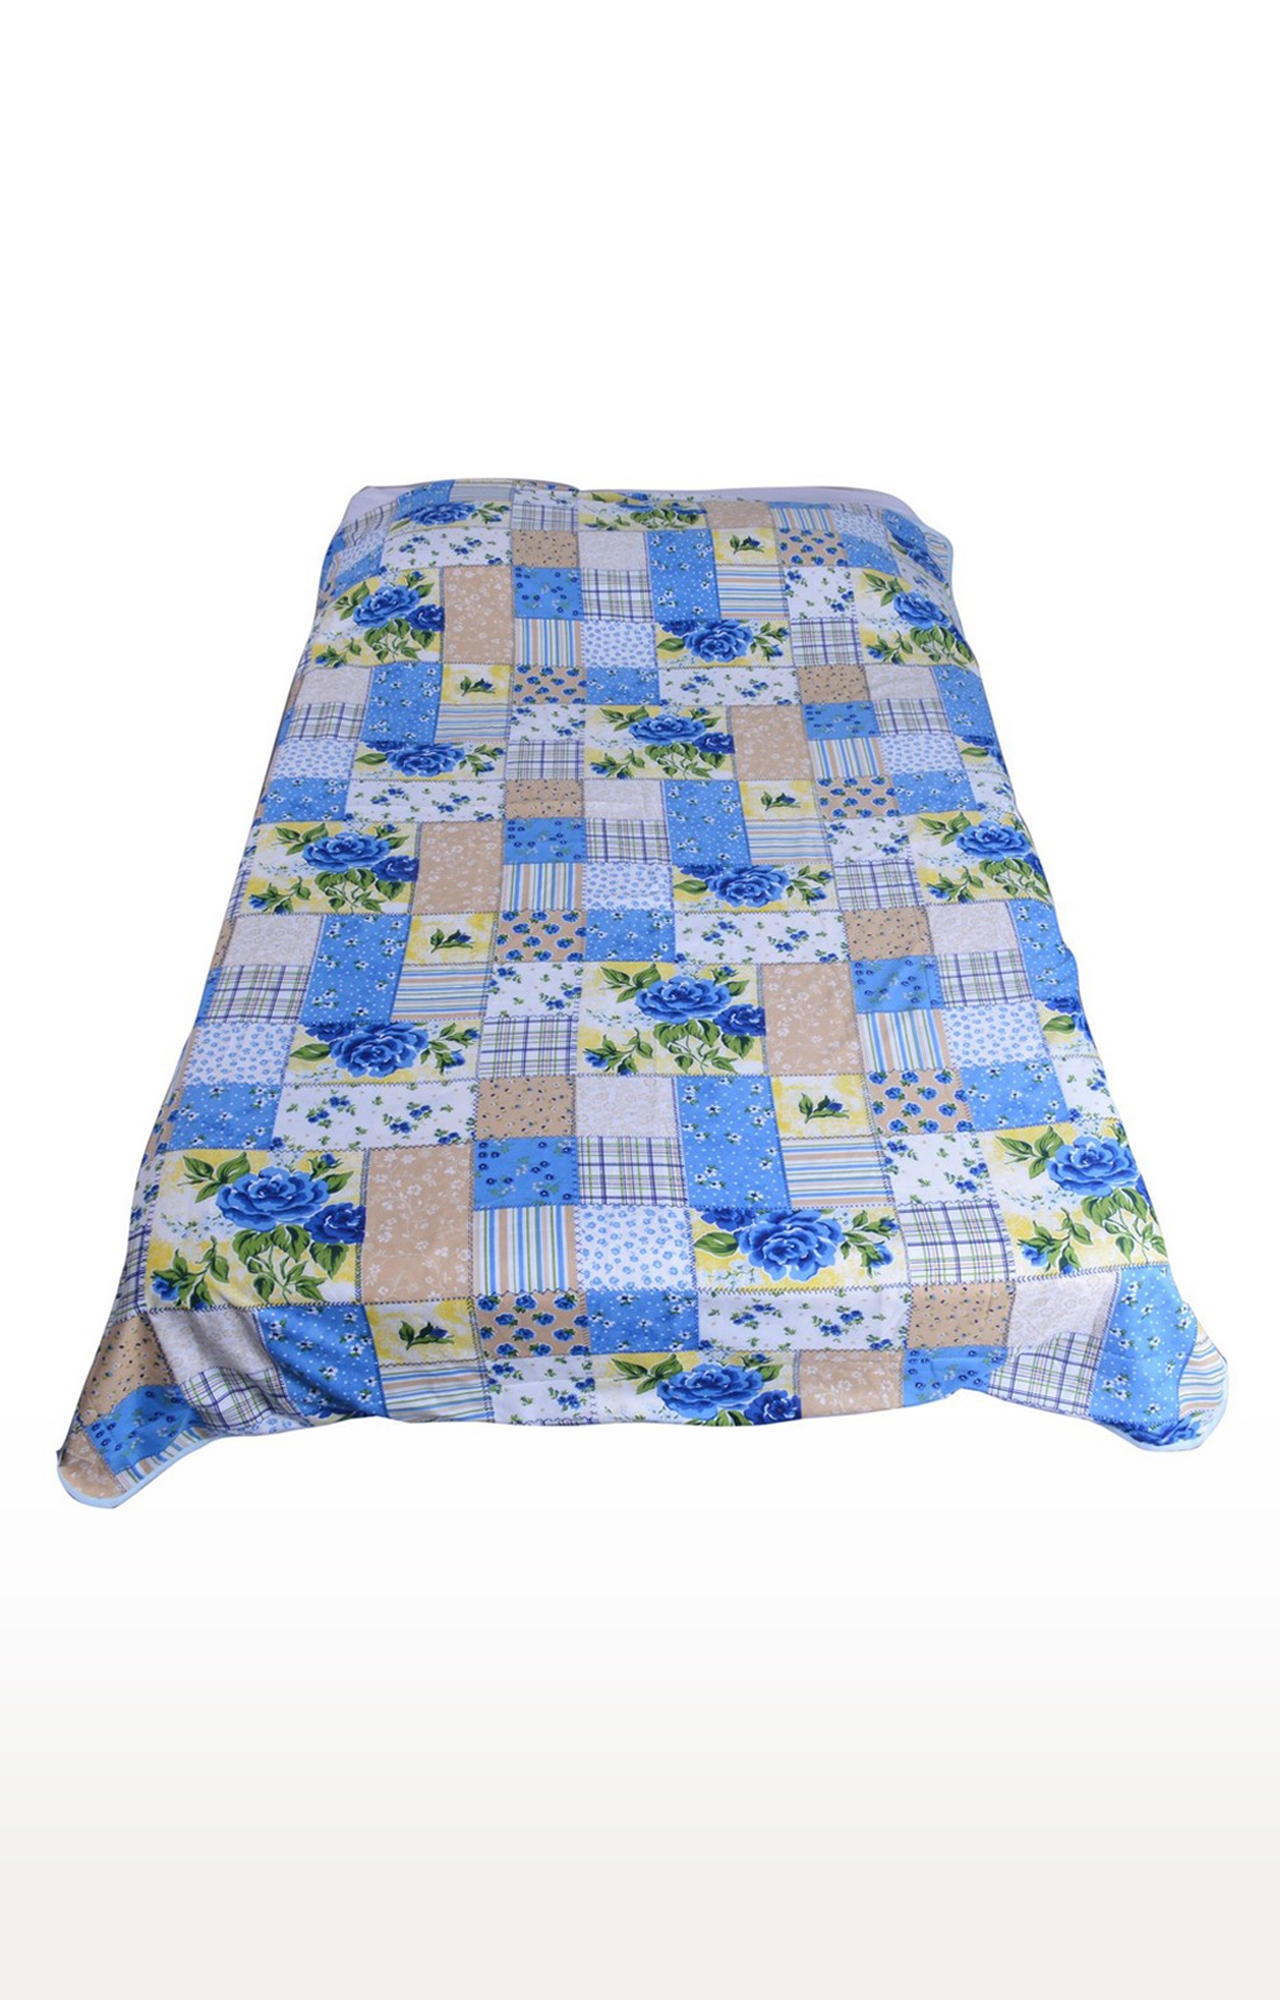 V Brown | Blue Checks & Flower Printed Cotton 3 Layer Single Bed Quilt Dohar 1